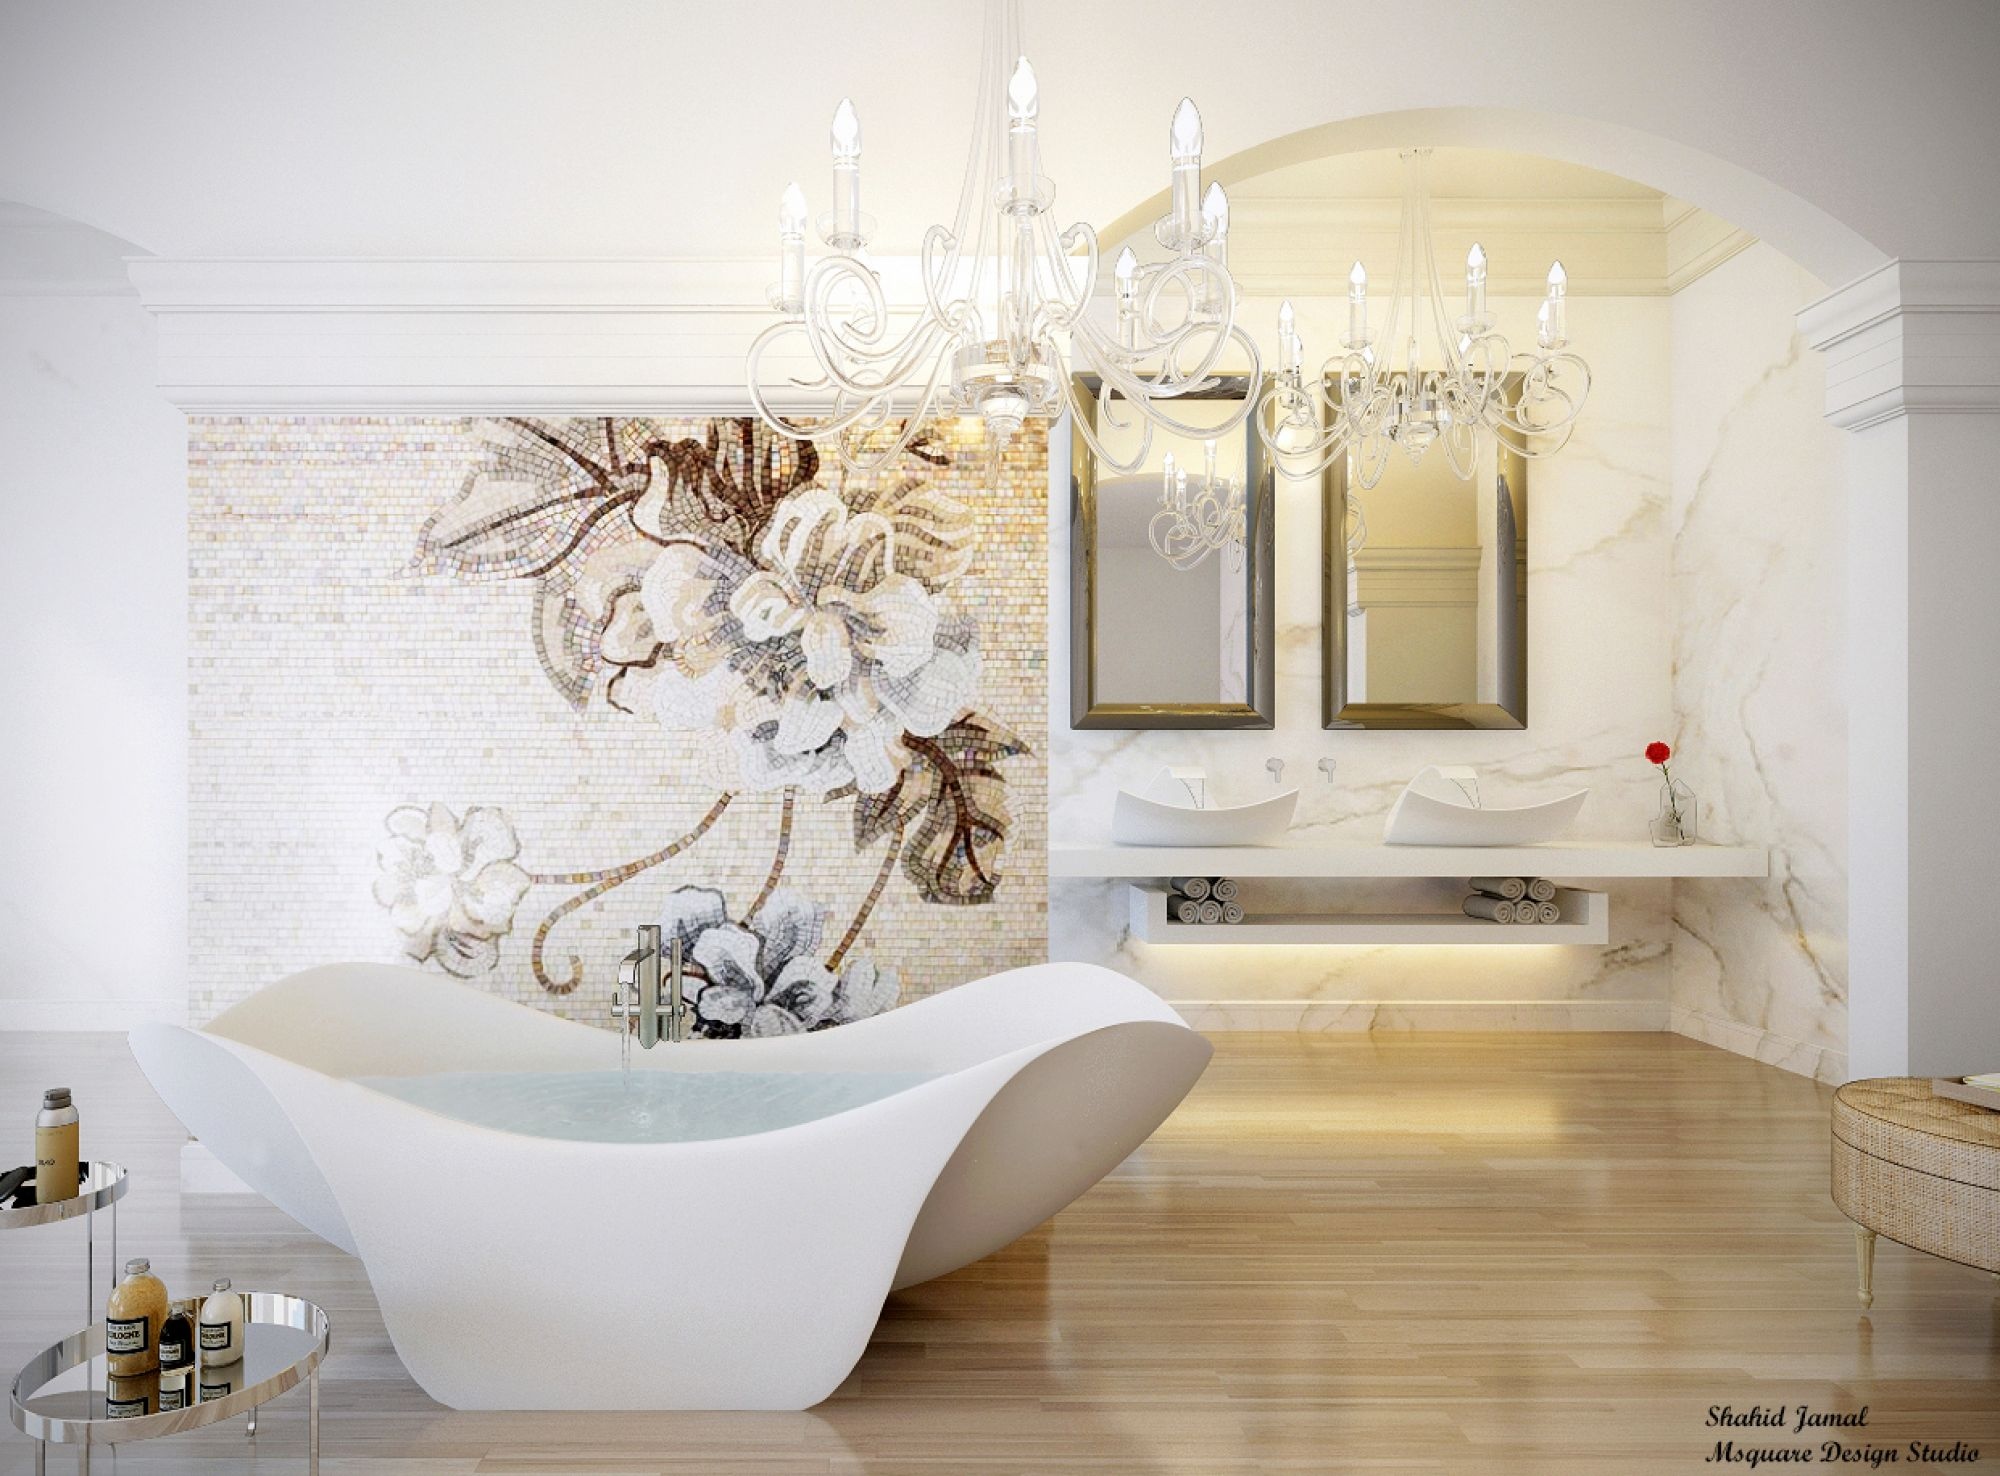 https://www.home-designing.com/wp-content/uploads/2014/10/luxurious-feminine-bath-design.jpeg